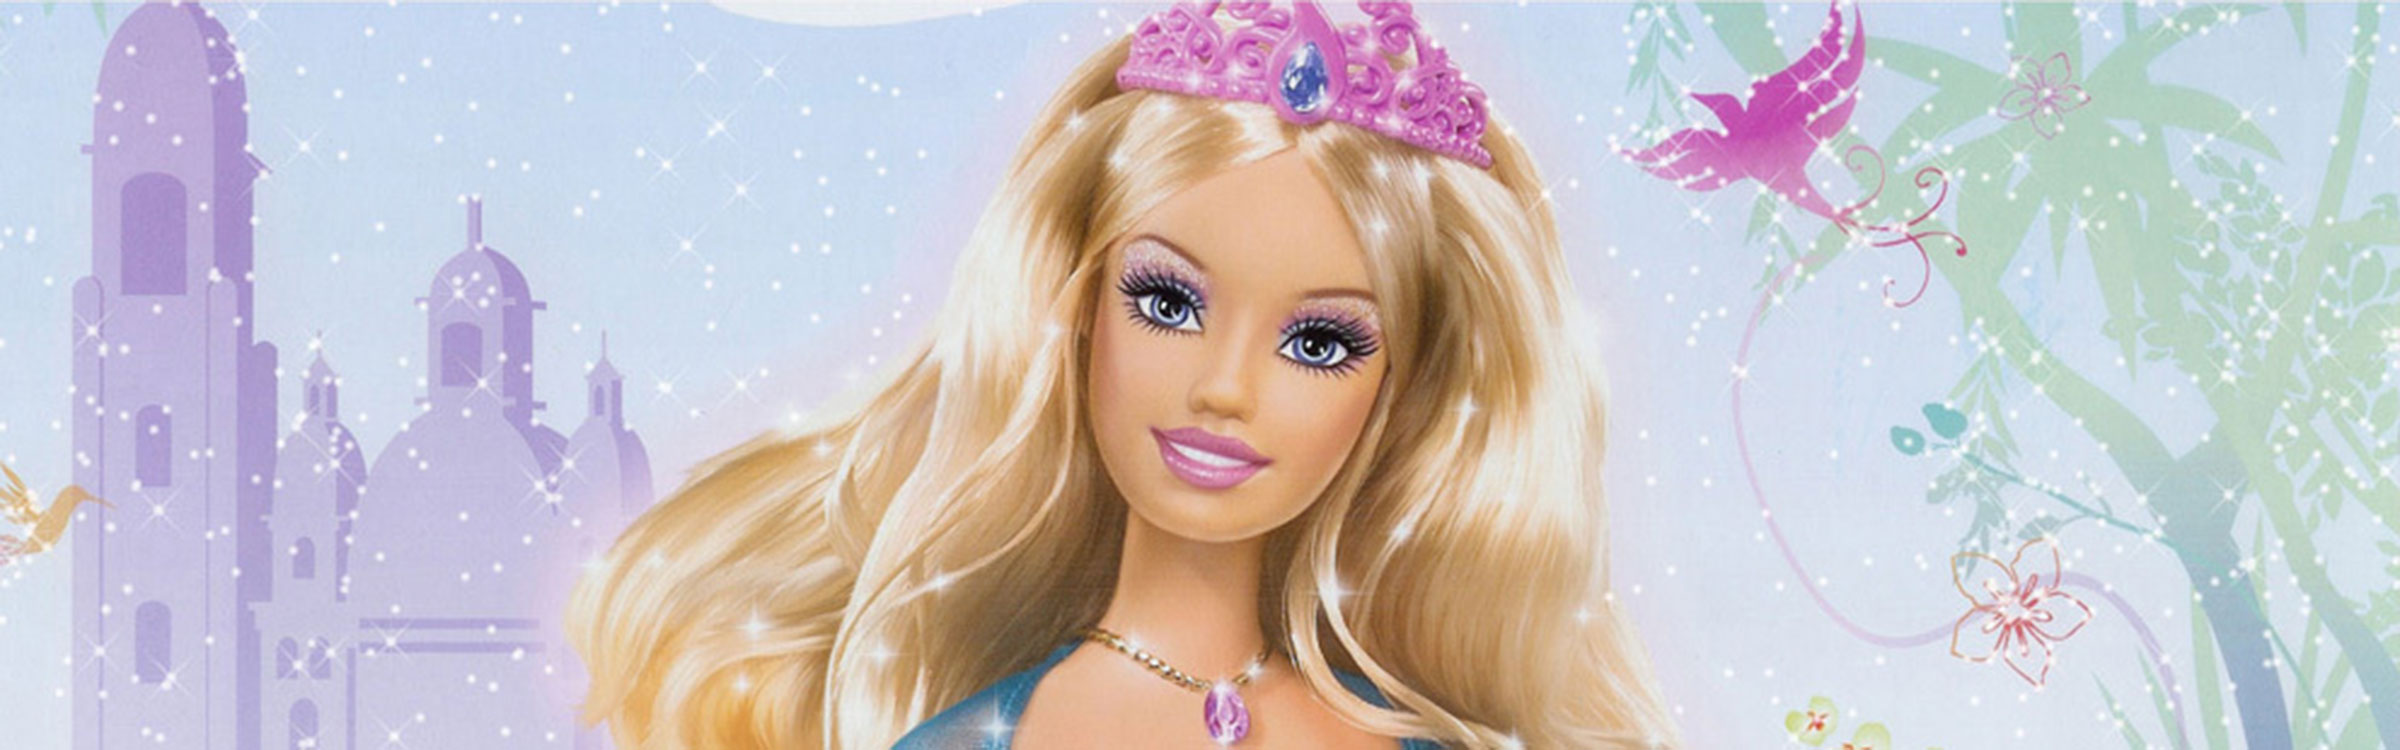 Barbie island princess barbie movies 12469842 1024 768